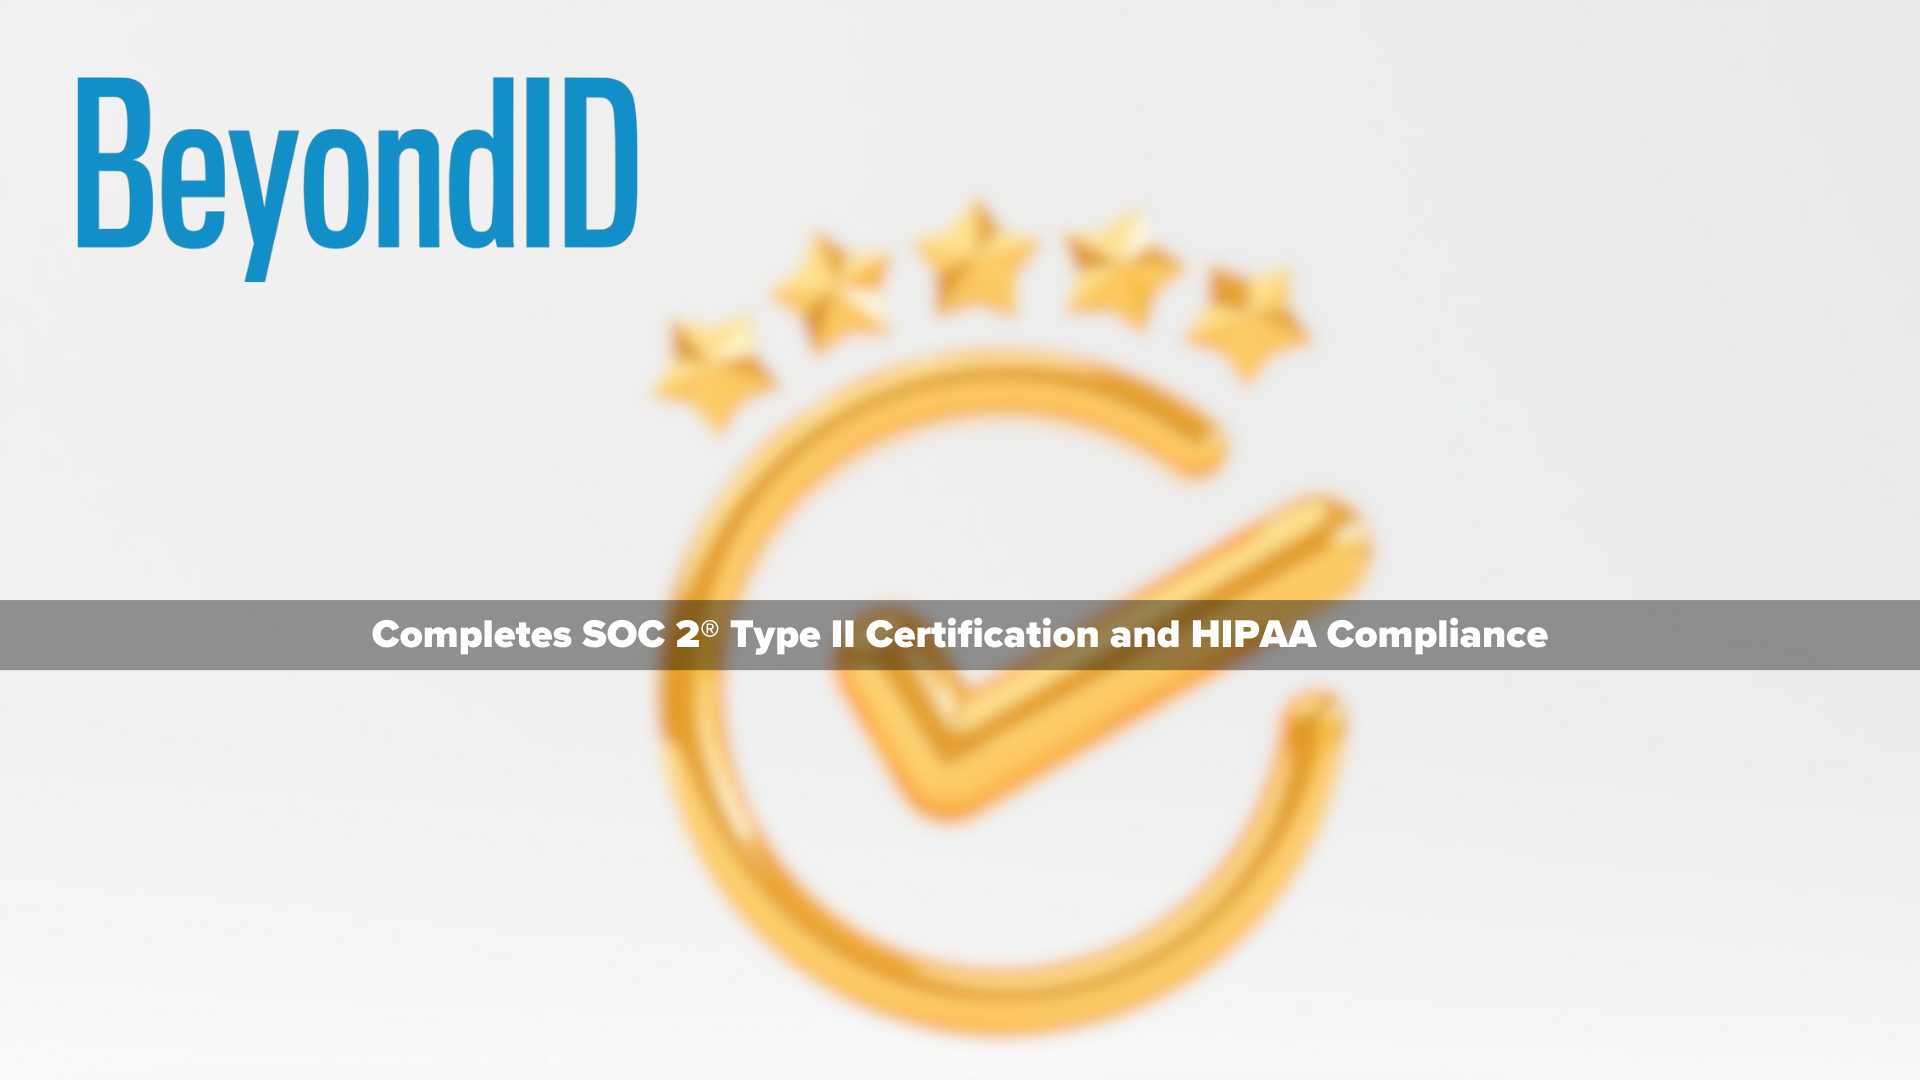 BeyondID Completes SOC 2® Type II Certification and HIPAA Compliance